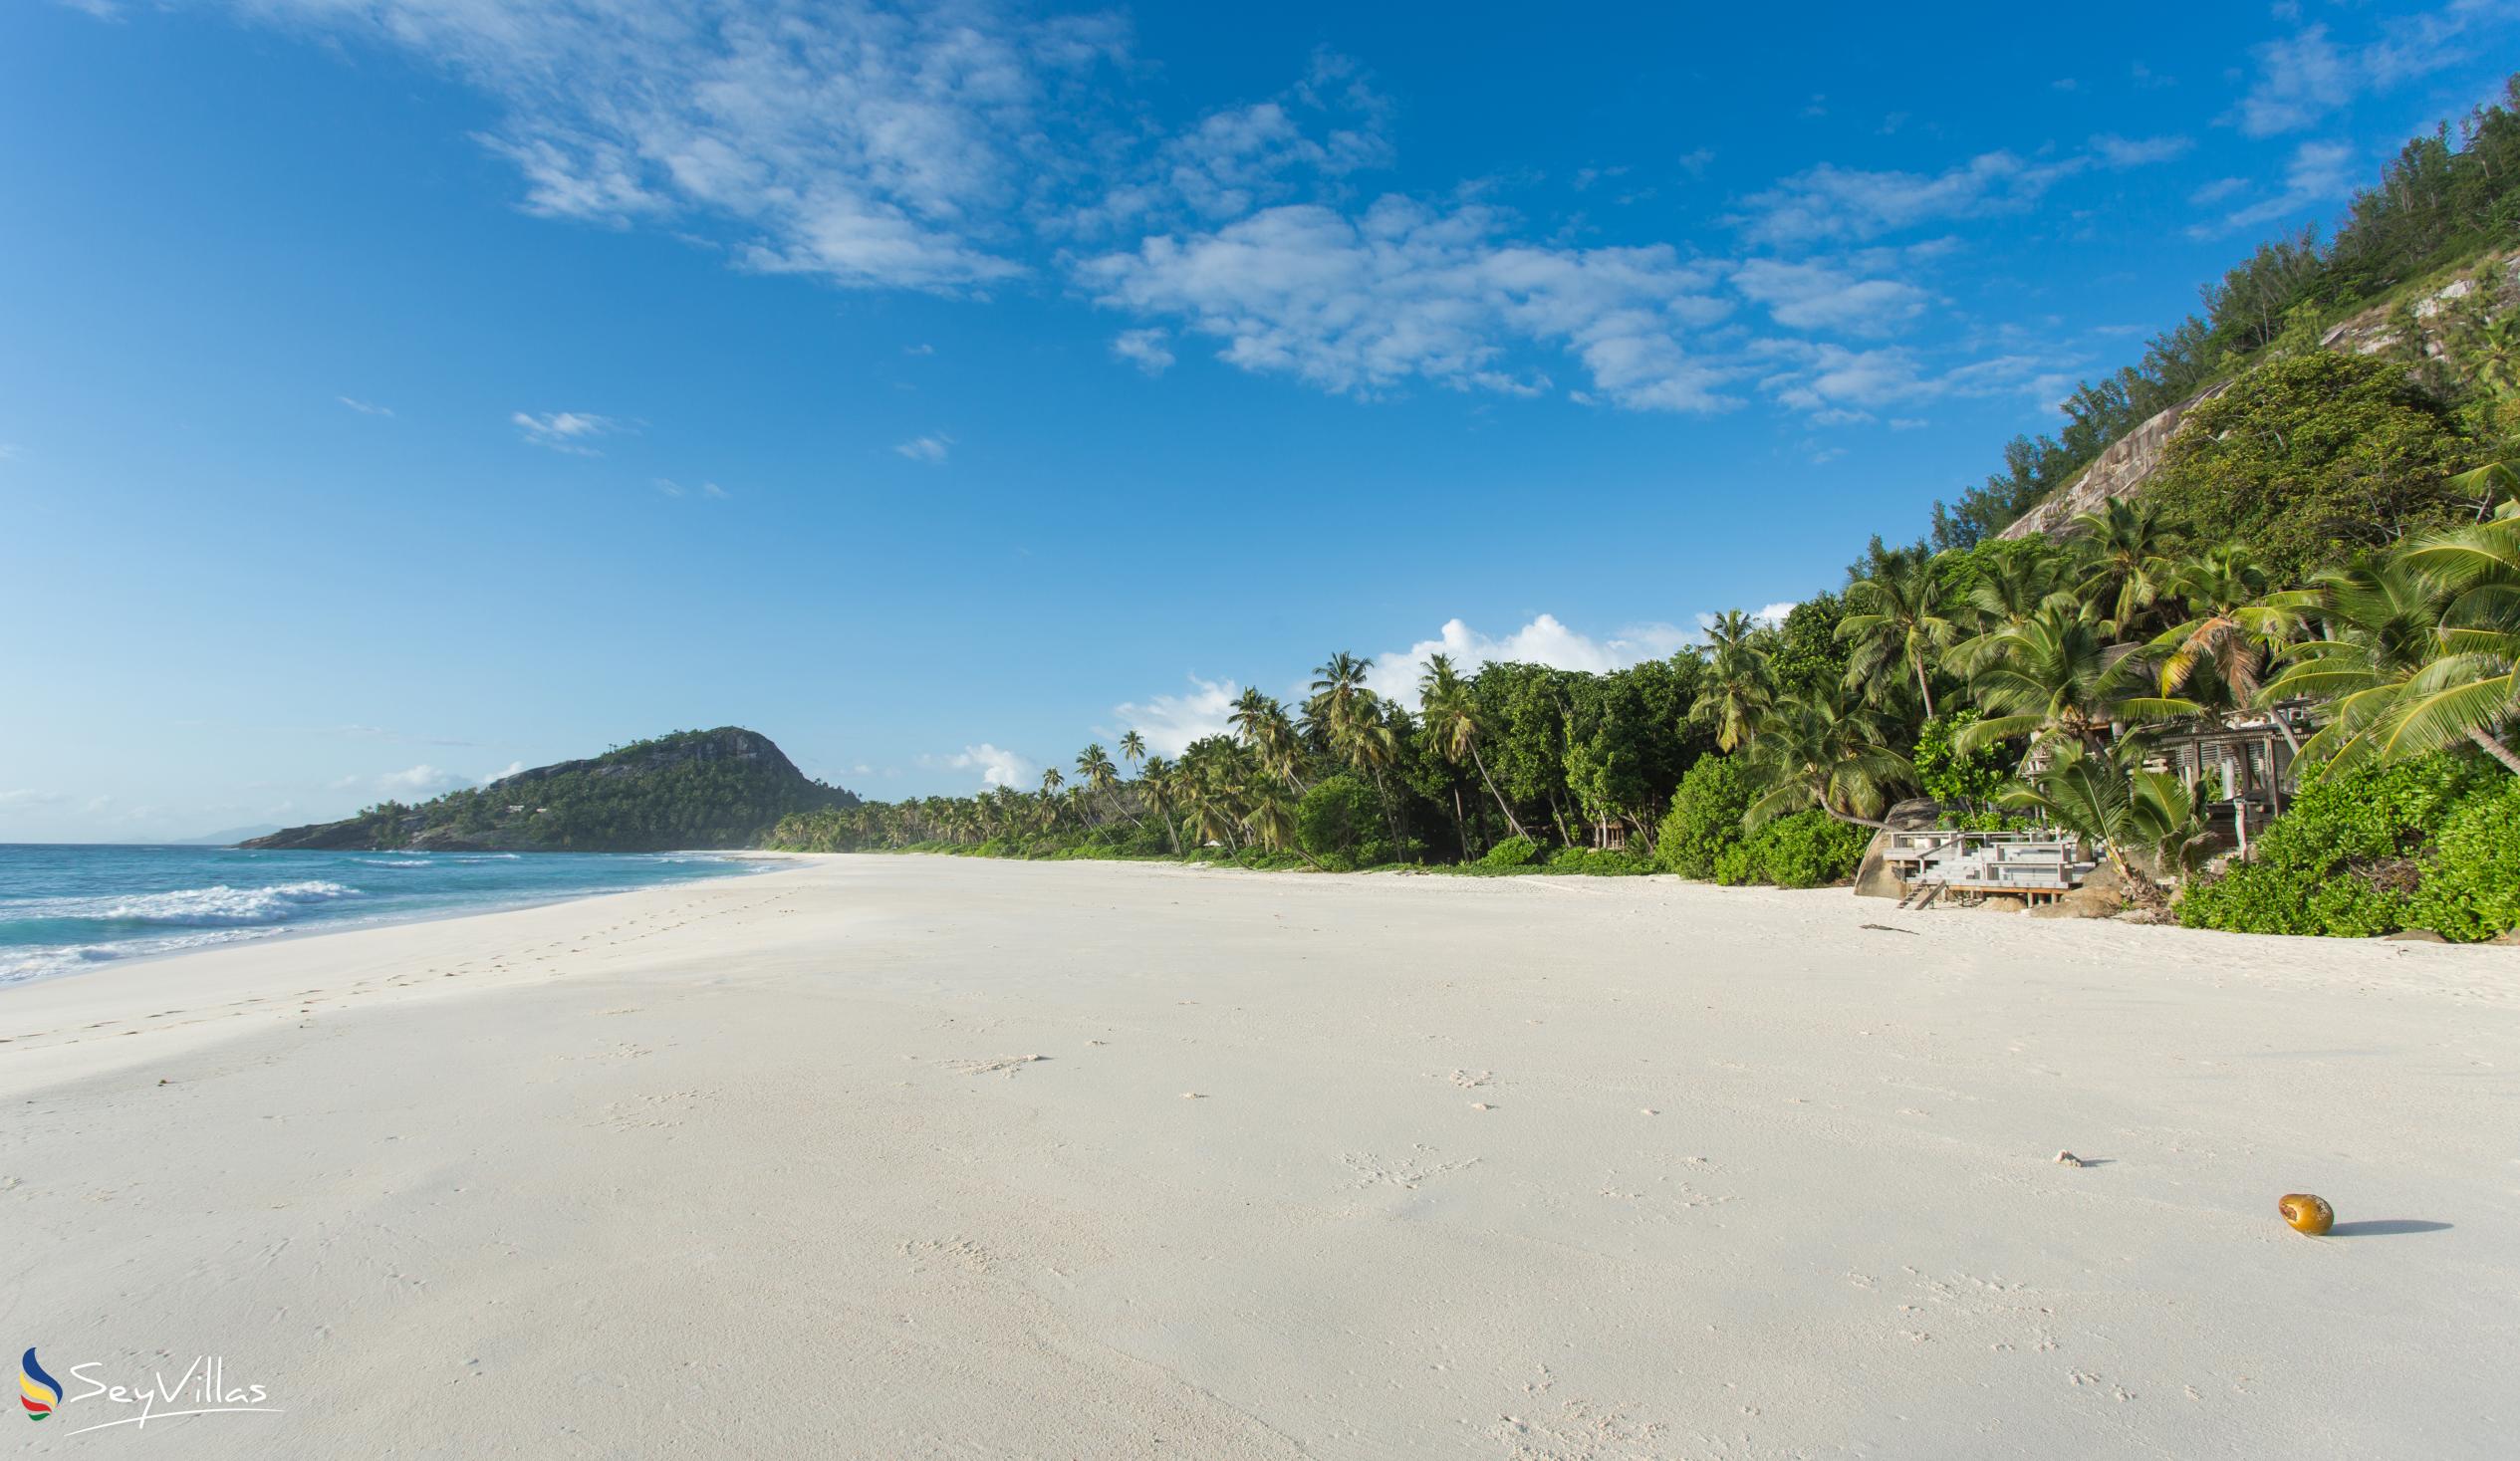 Photo 1: West Beach - North Island - Other islands (Seychelles)